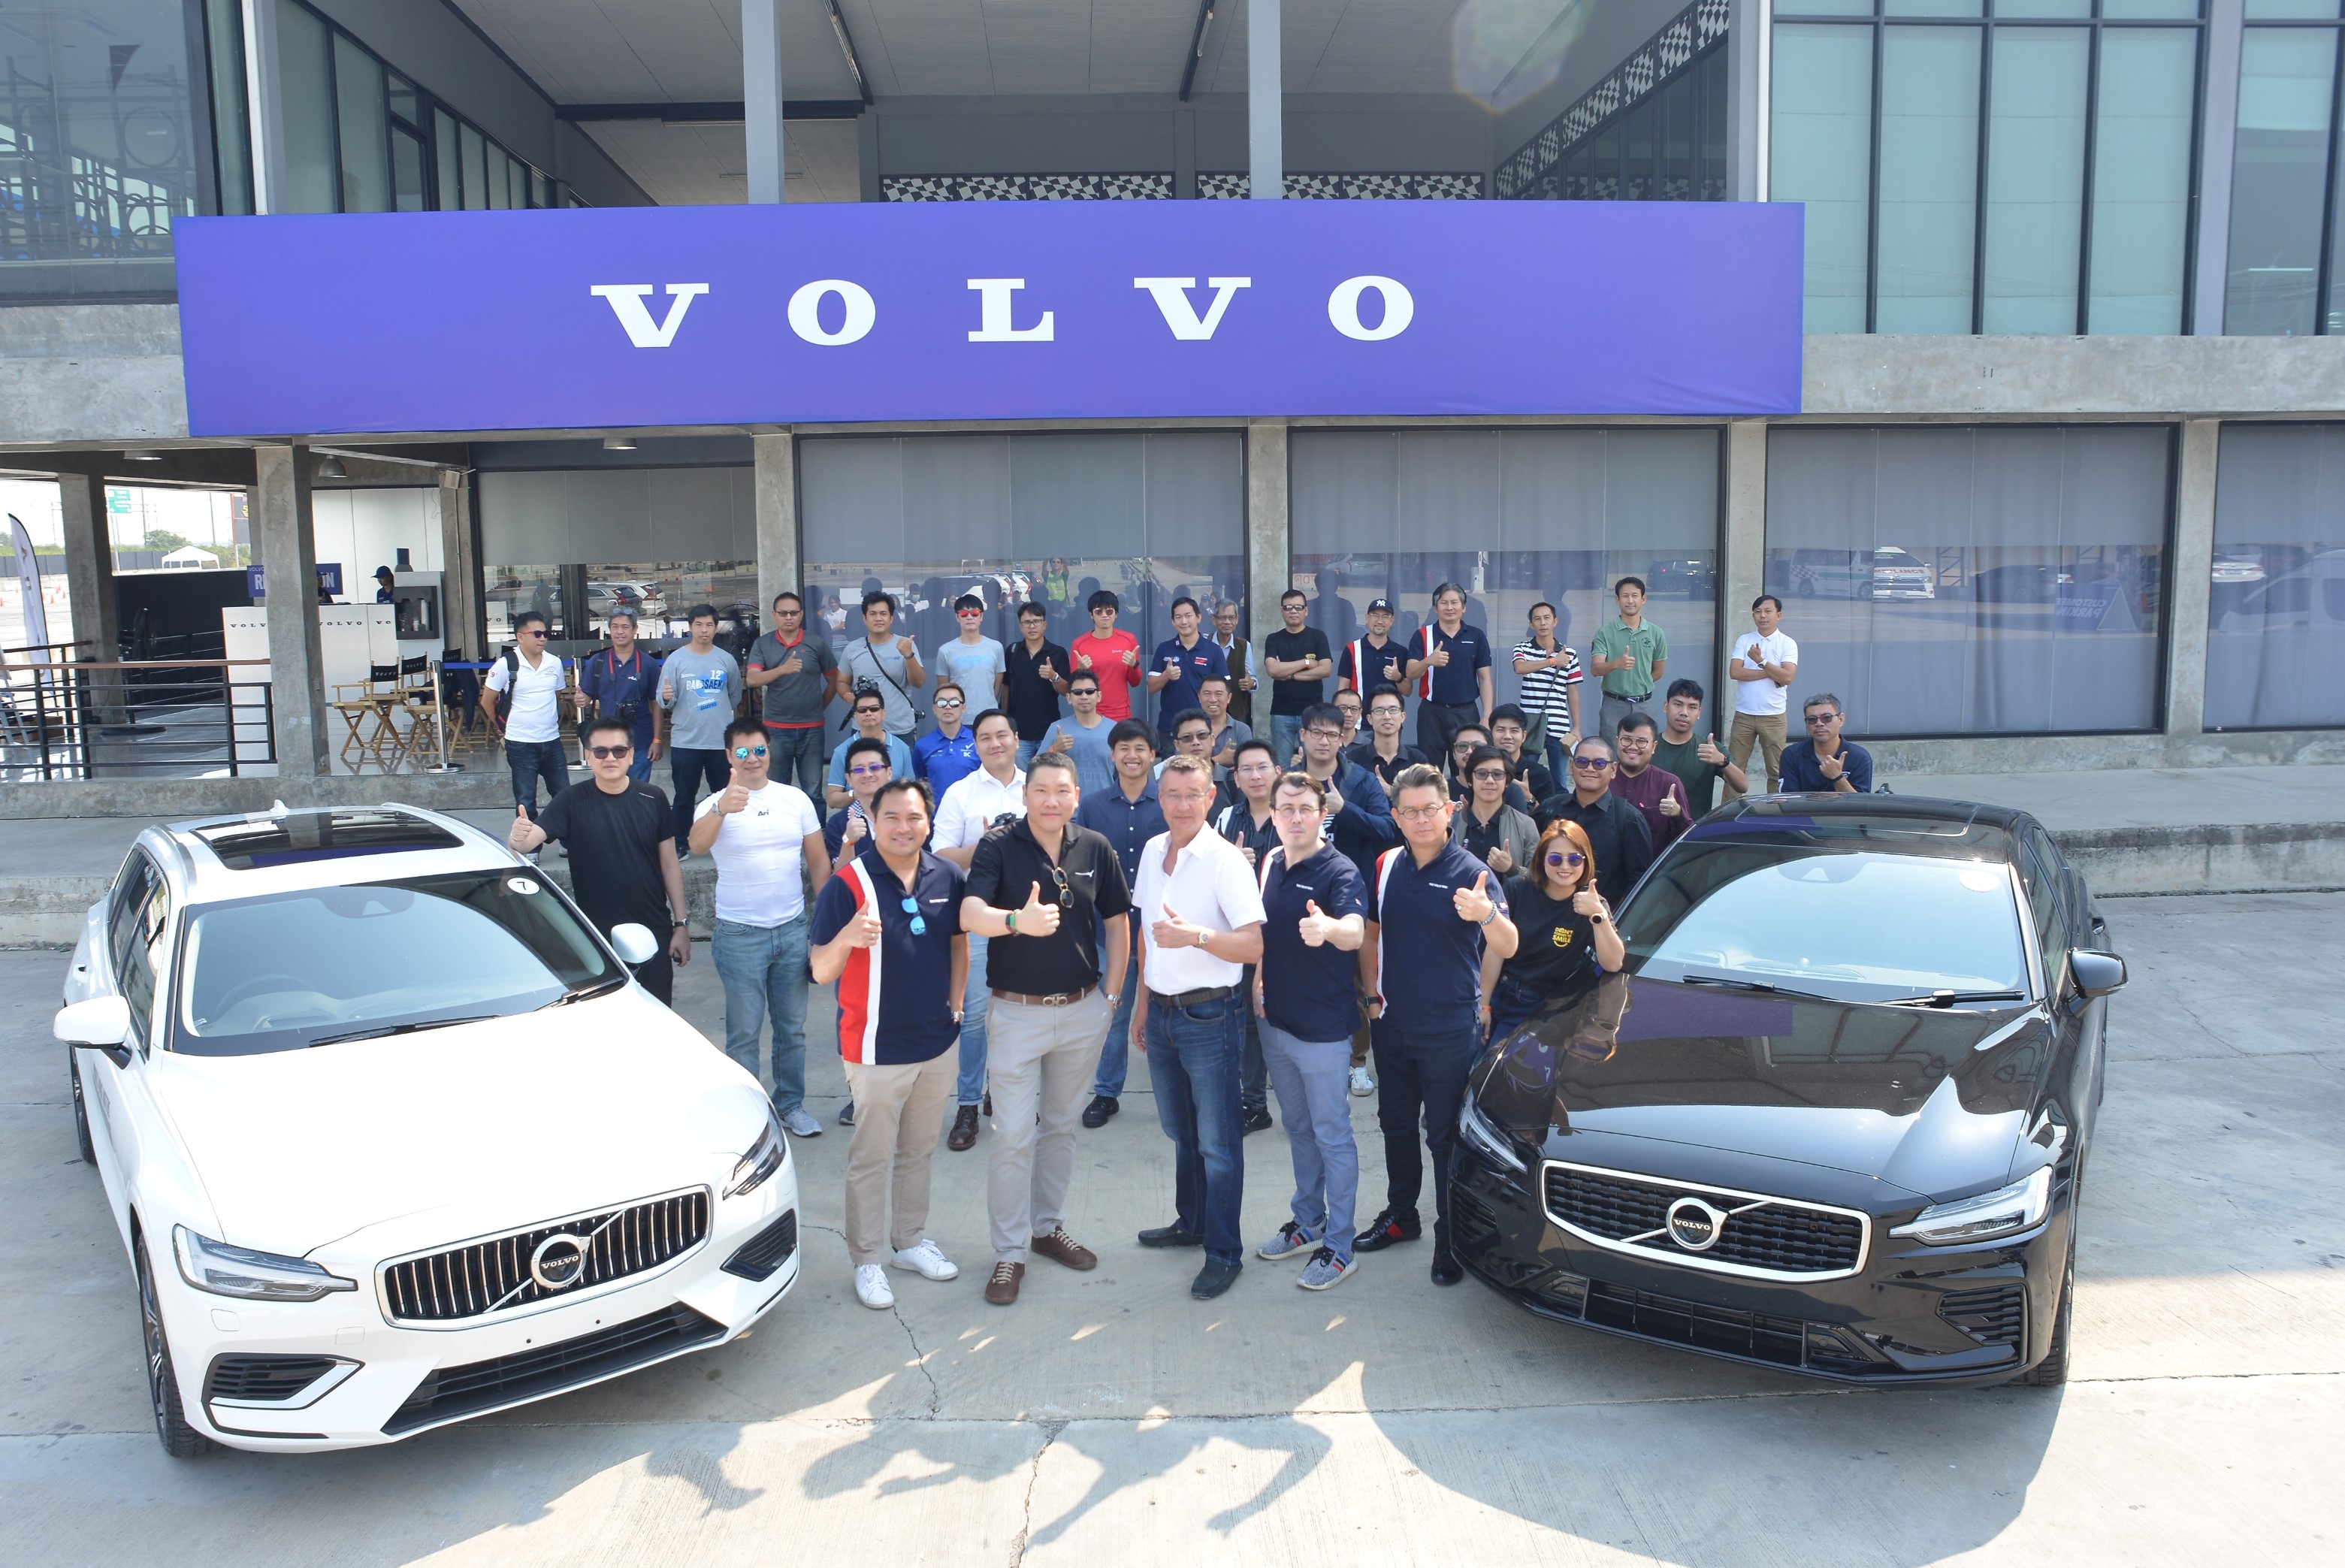 Volvo Driving Experience การทดสอบสมรรถนะครั้งสำคัญภายใต้คอนเซ็ปต์ “Protect What Matters, Drive Your Desire”